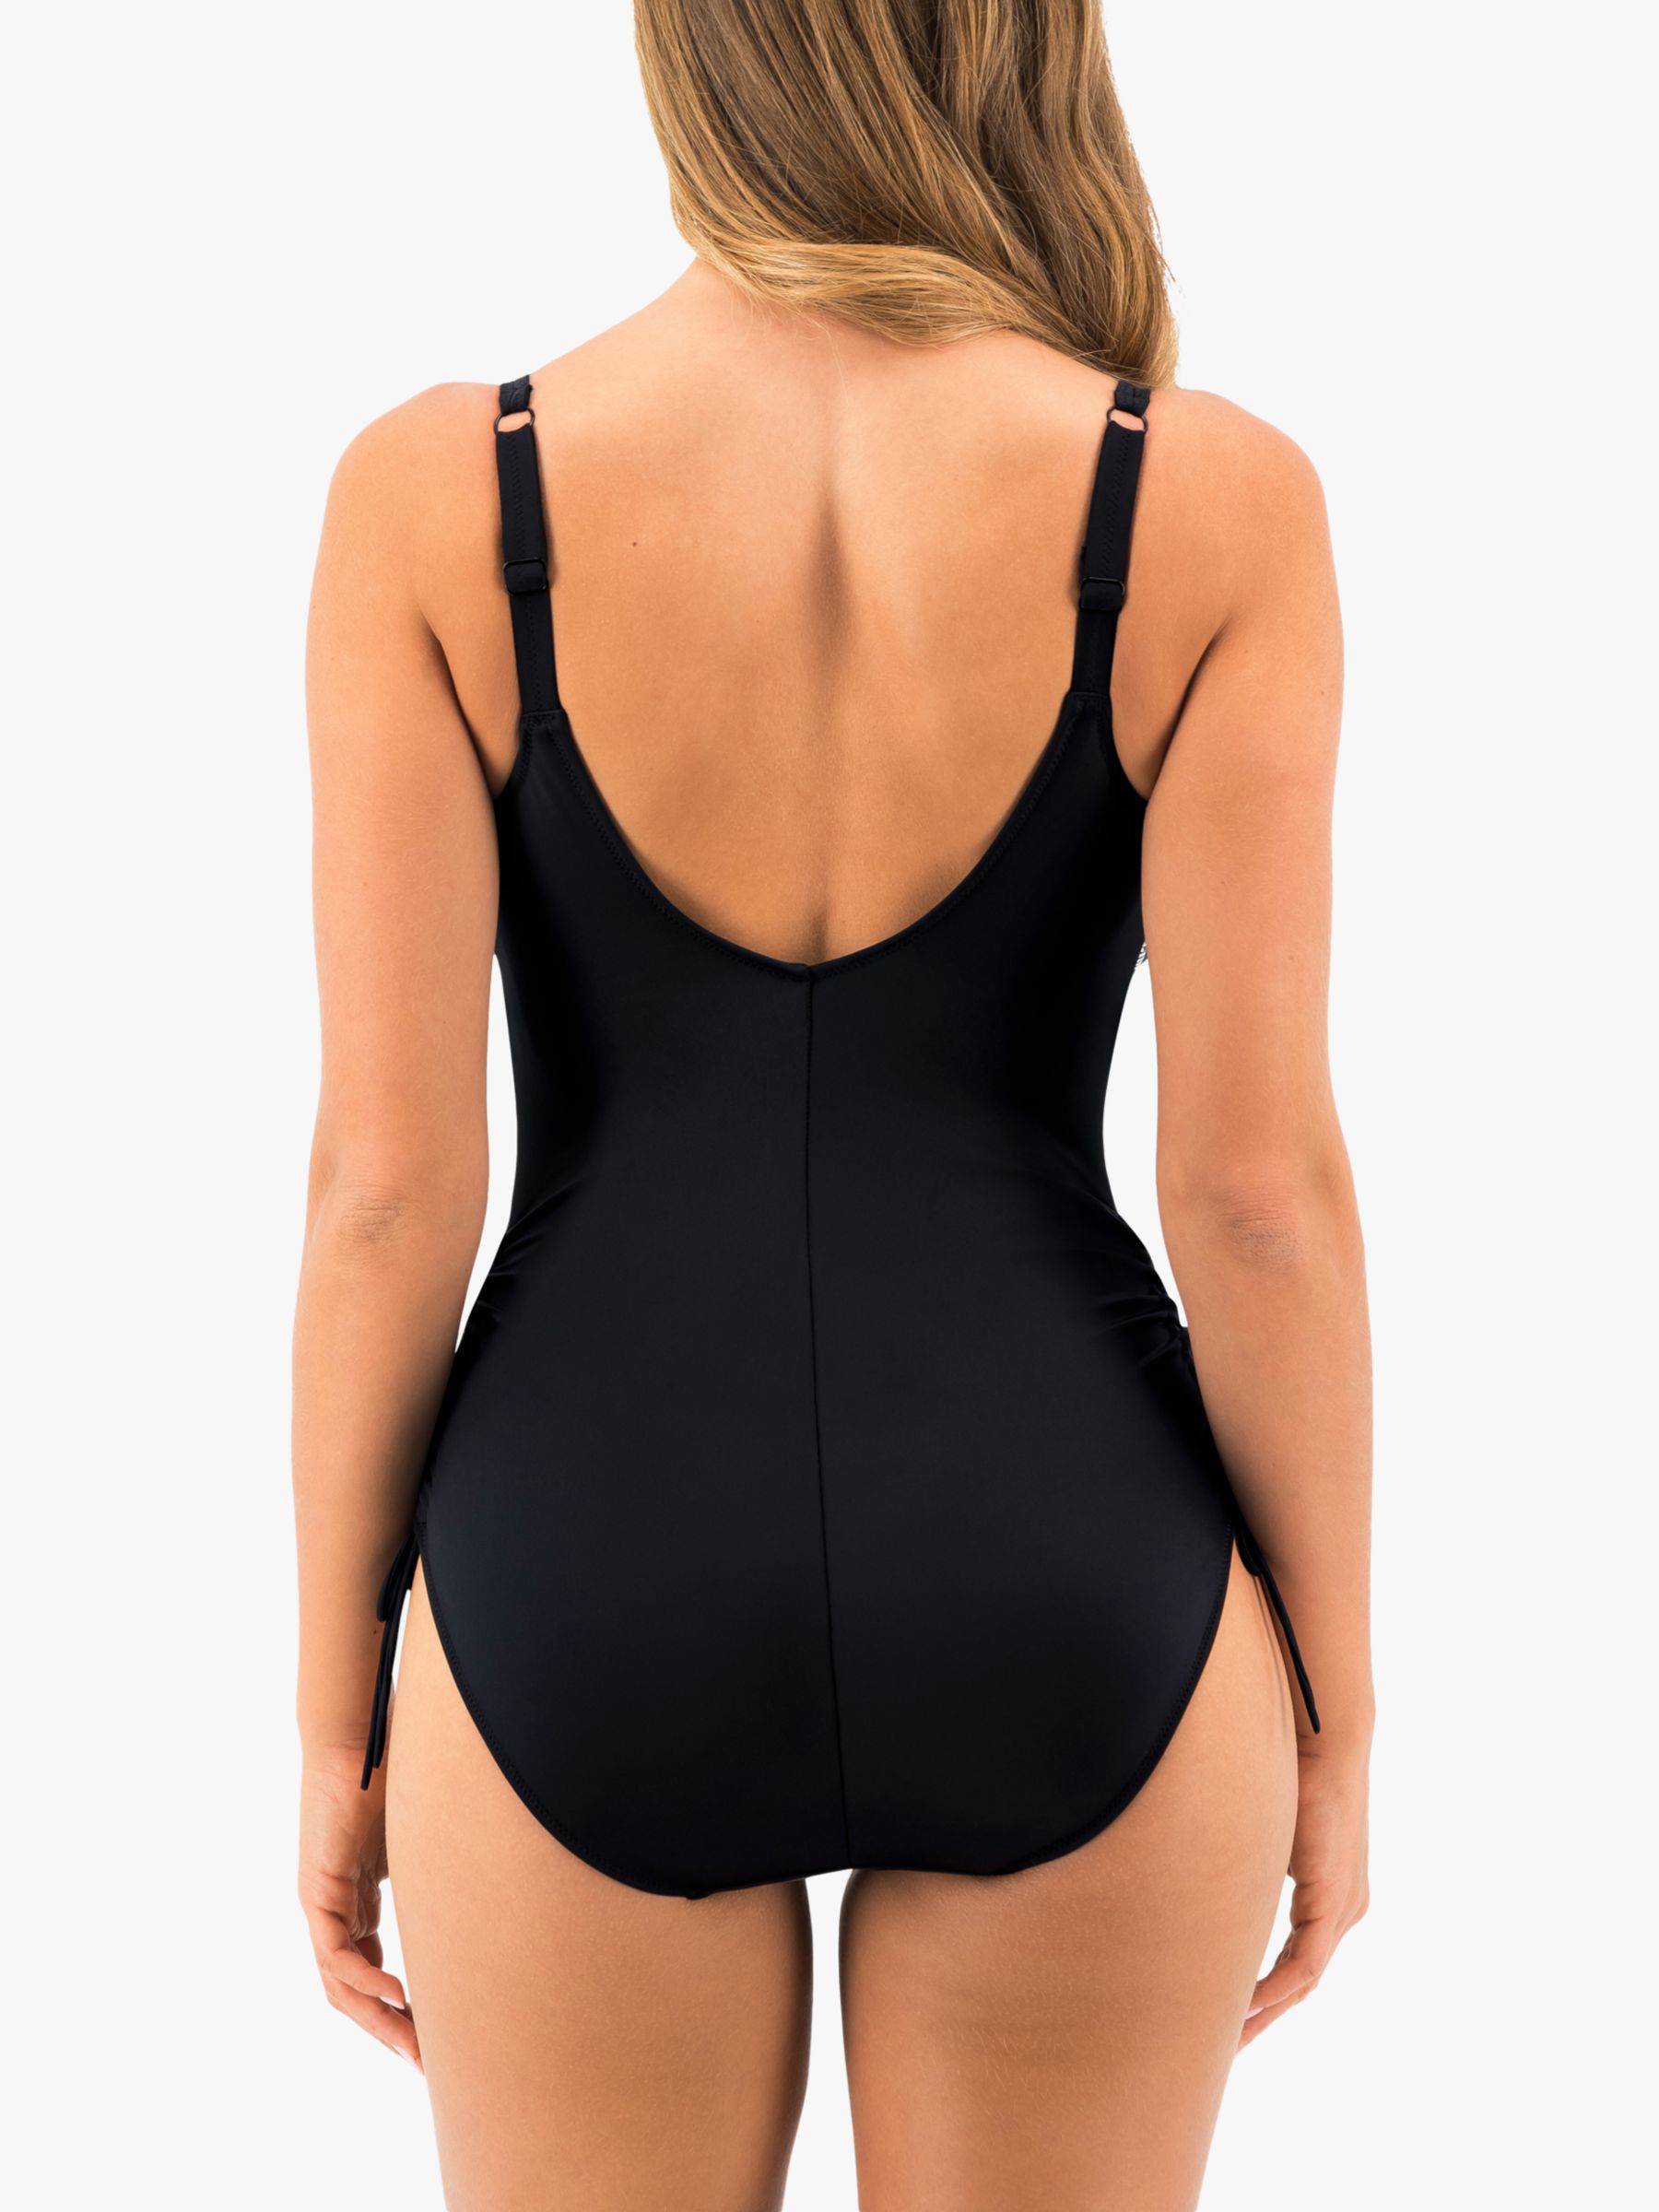 Fantasie Saint Lucia Twist Front Underwired Swimsuit, Black, 32E